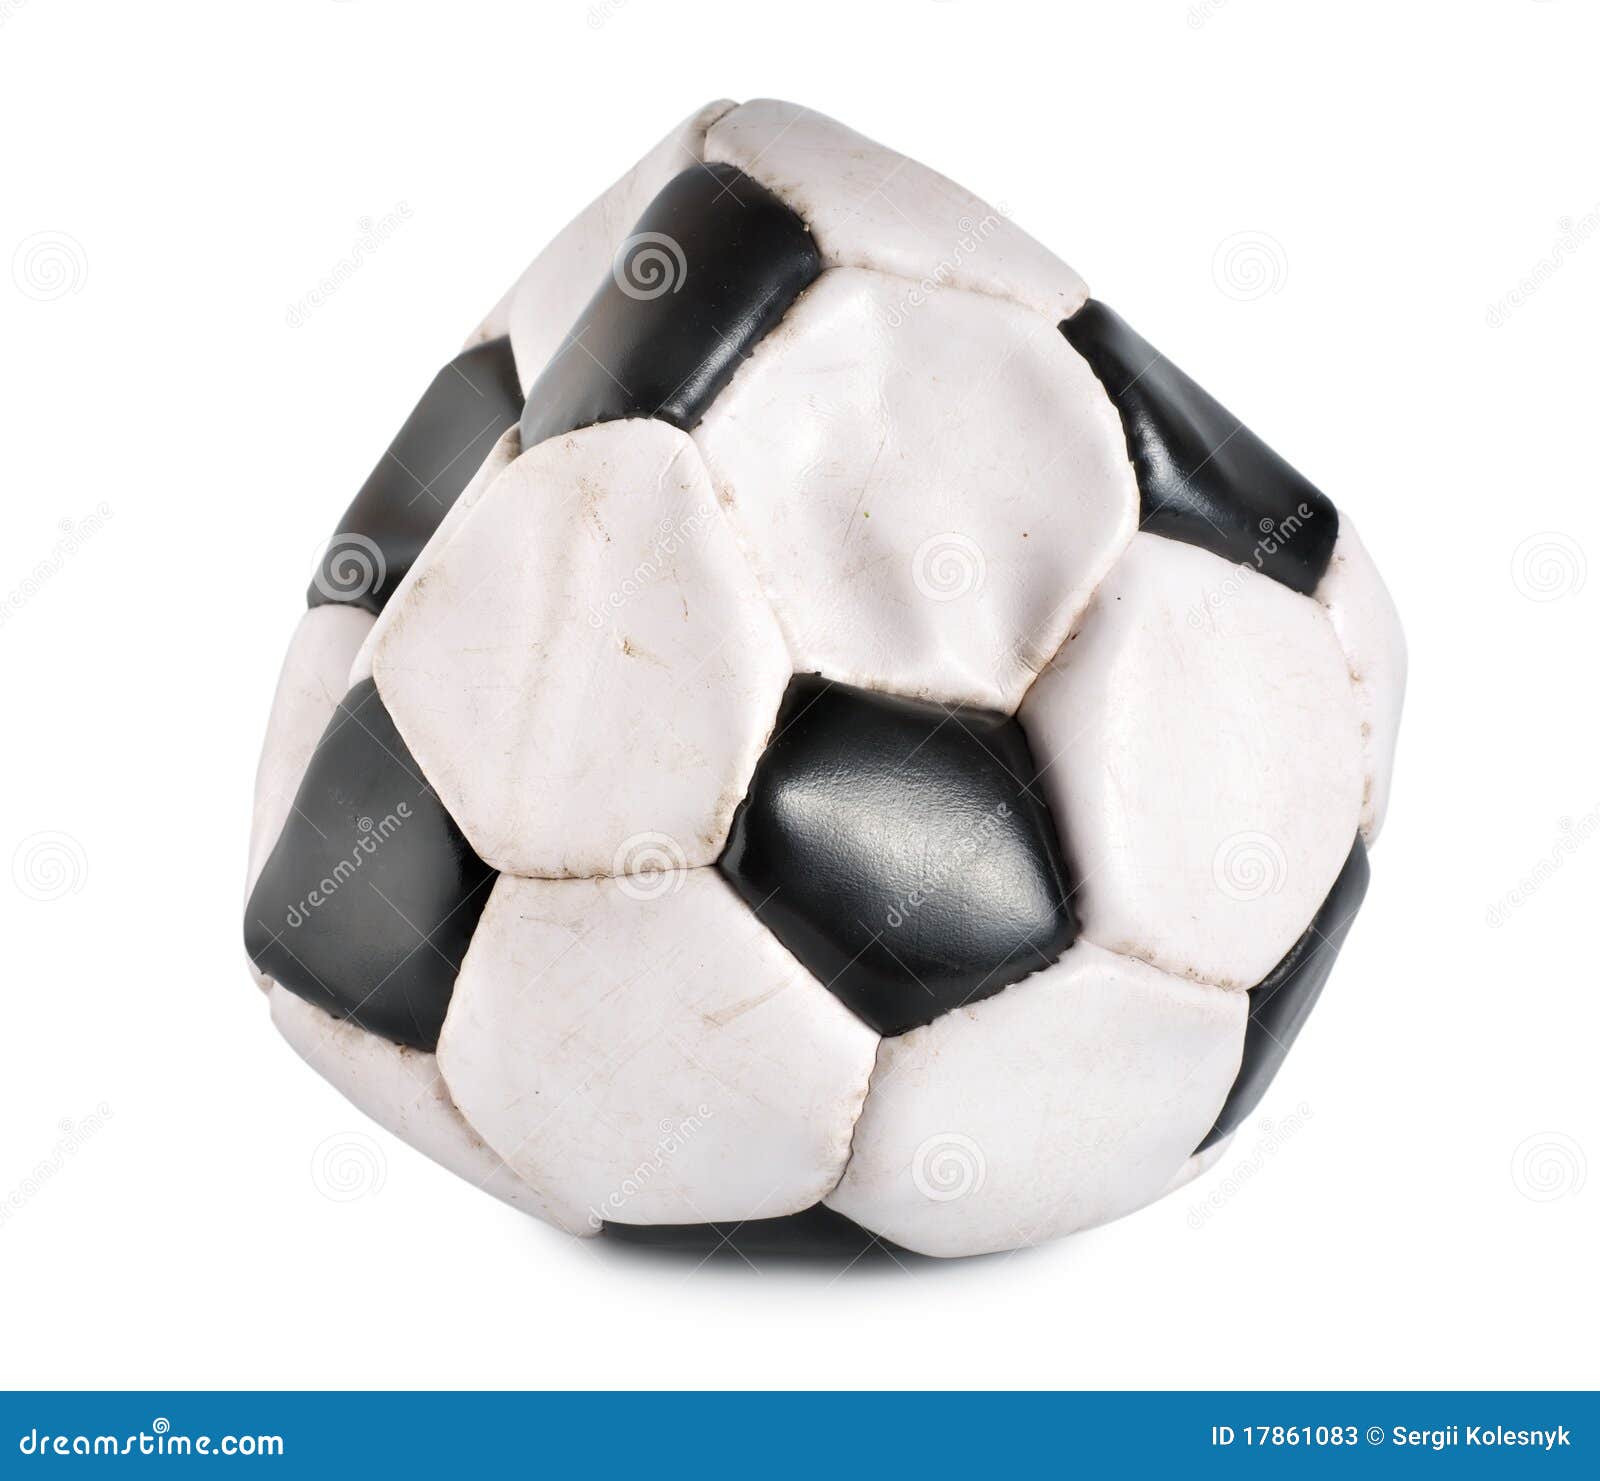 deflated-soccer-ball-17861083.jpg